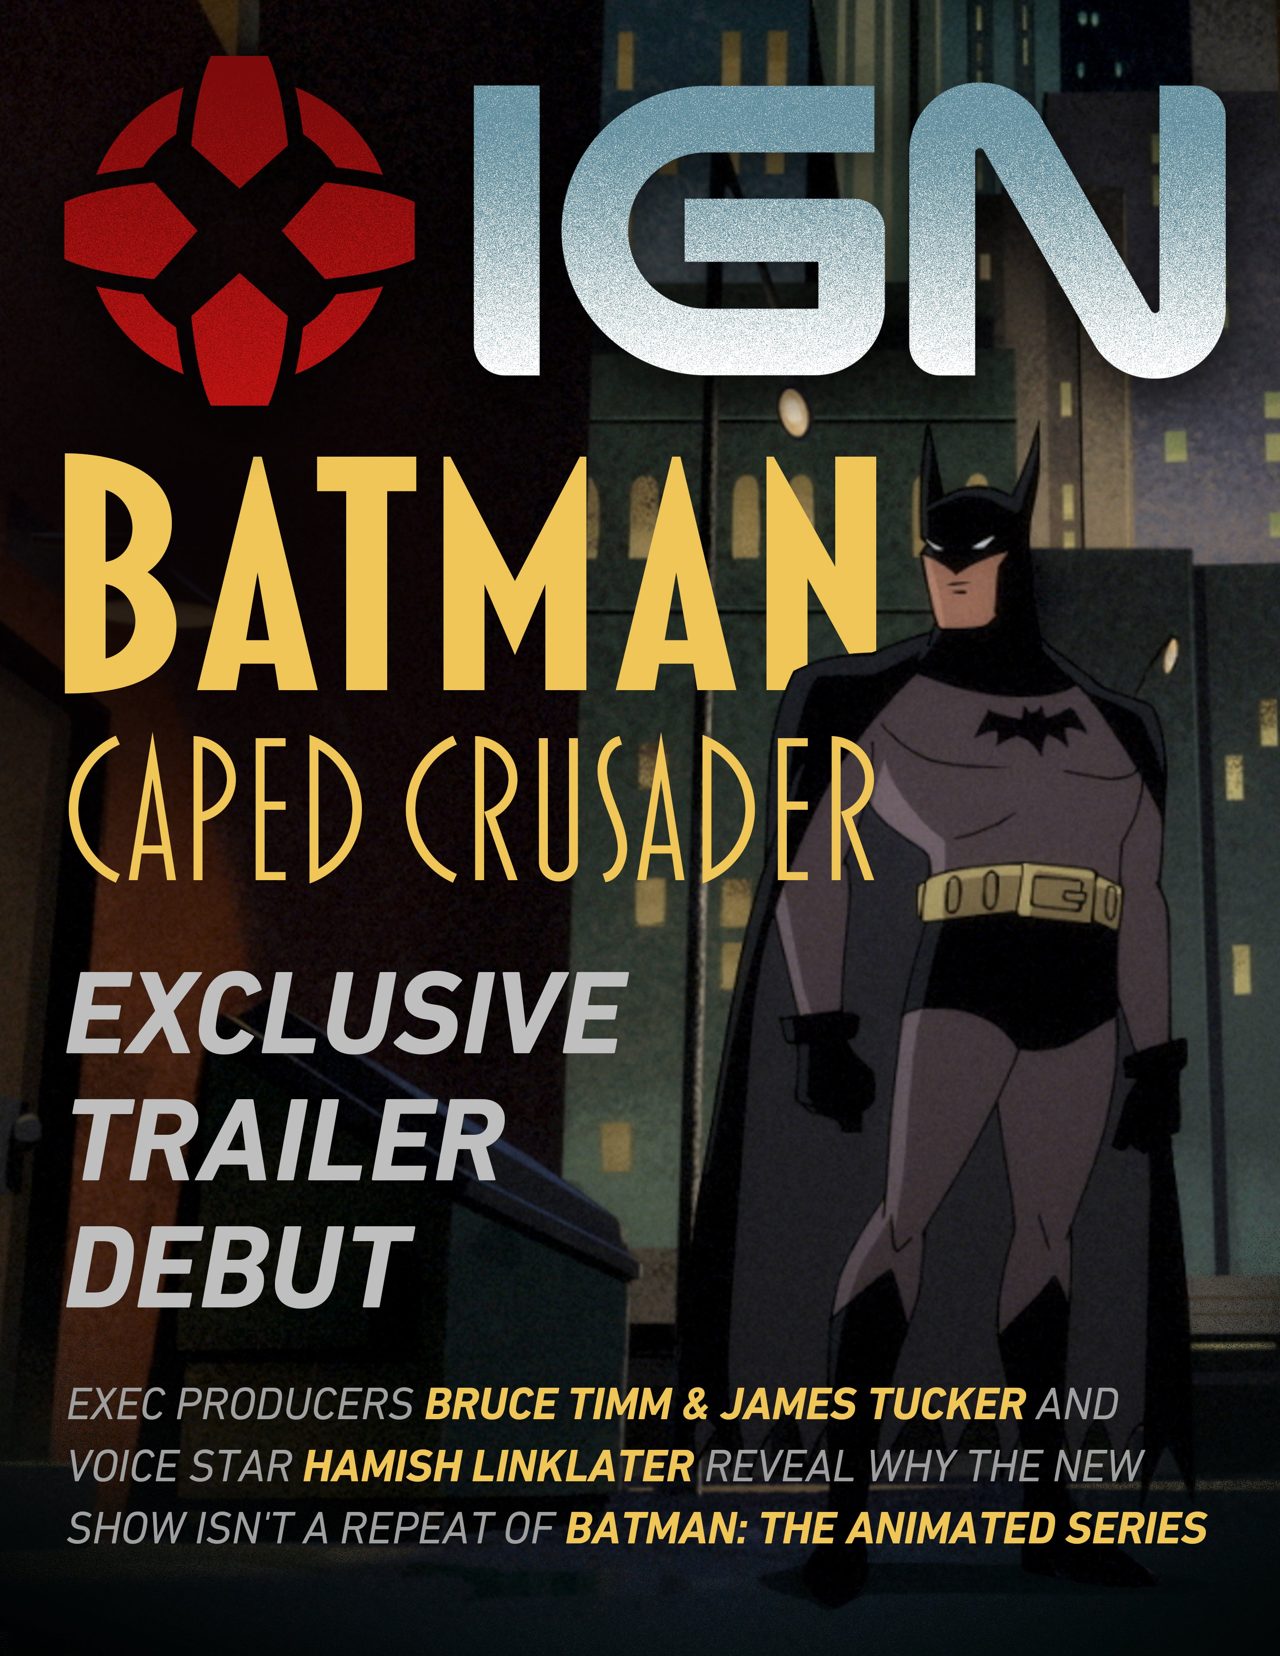 Batman: Caped Crusader Exclusieve Trailer